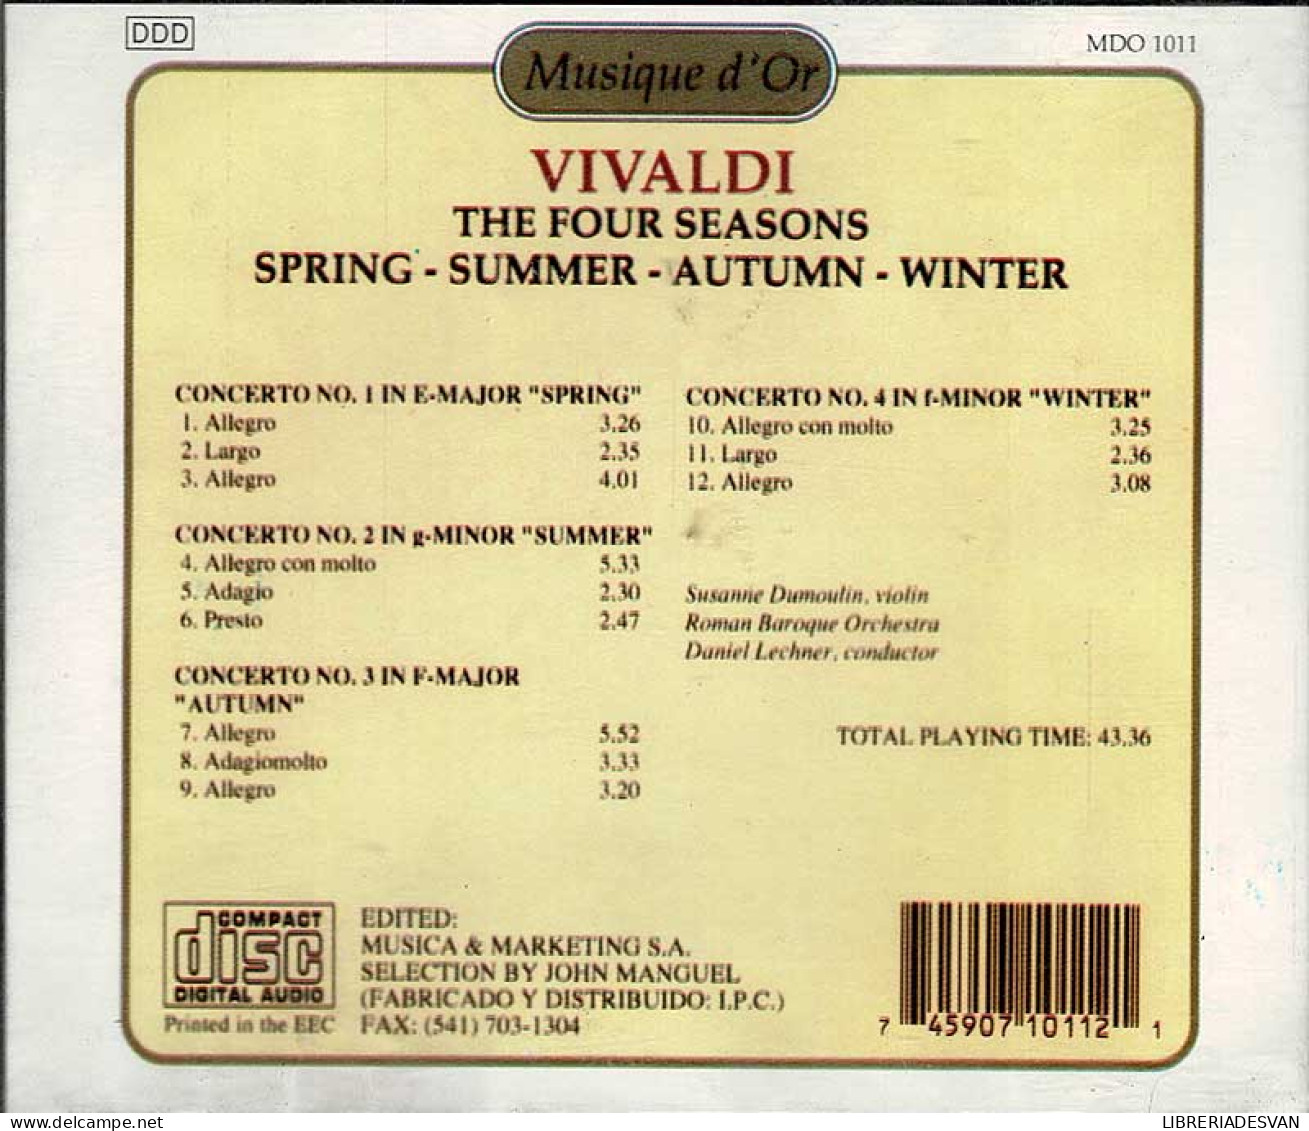 Vivaldi - The Four Seasons. CD - Classica